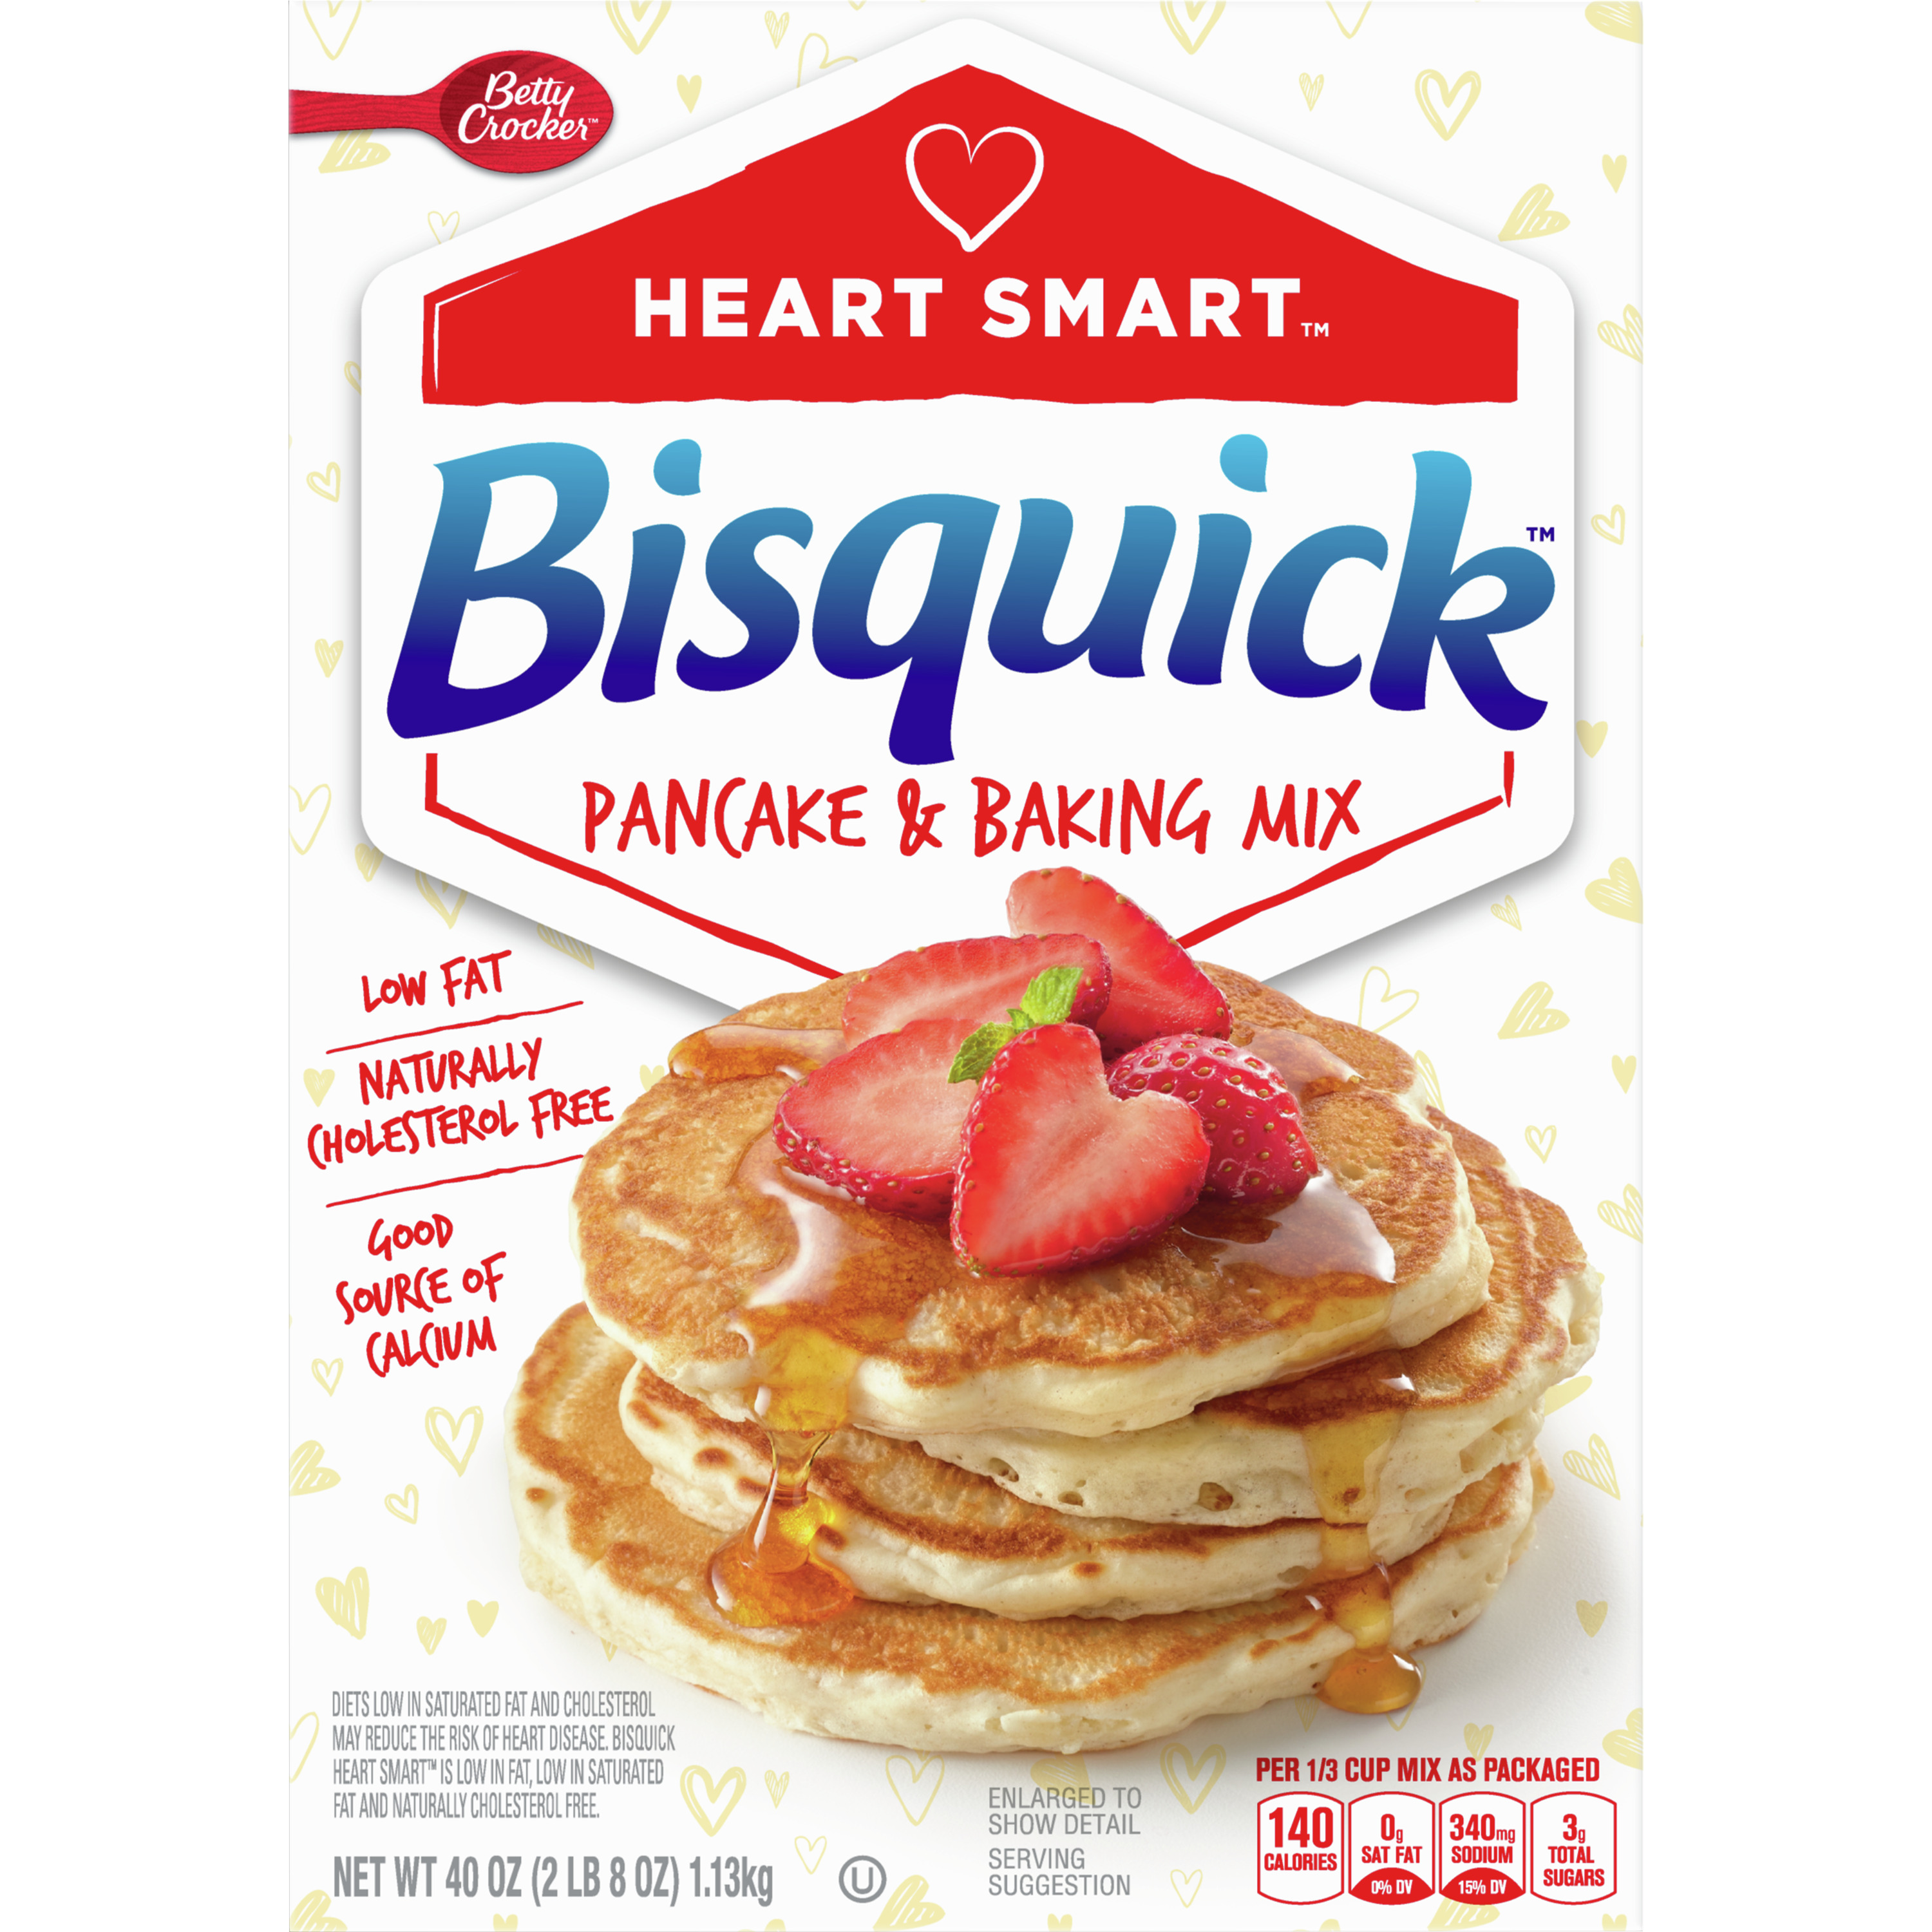 Betty Crocker Heart Smart Bisquick Pancake and Baking Mix, Low-fat & Cholesterol-free, 40 oz. - image 3 of 10